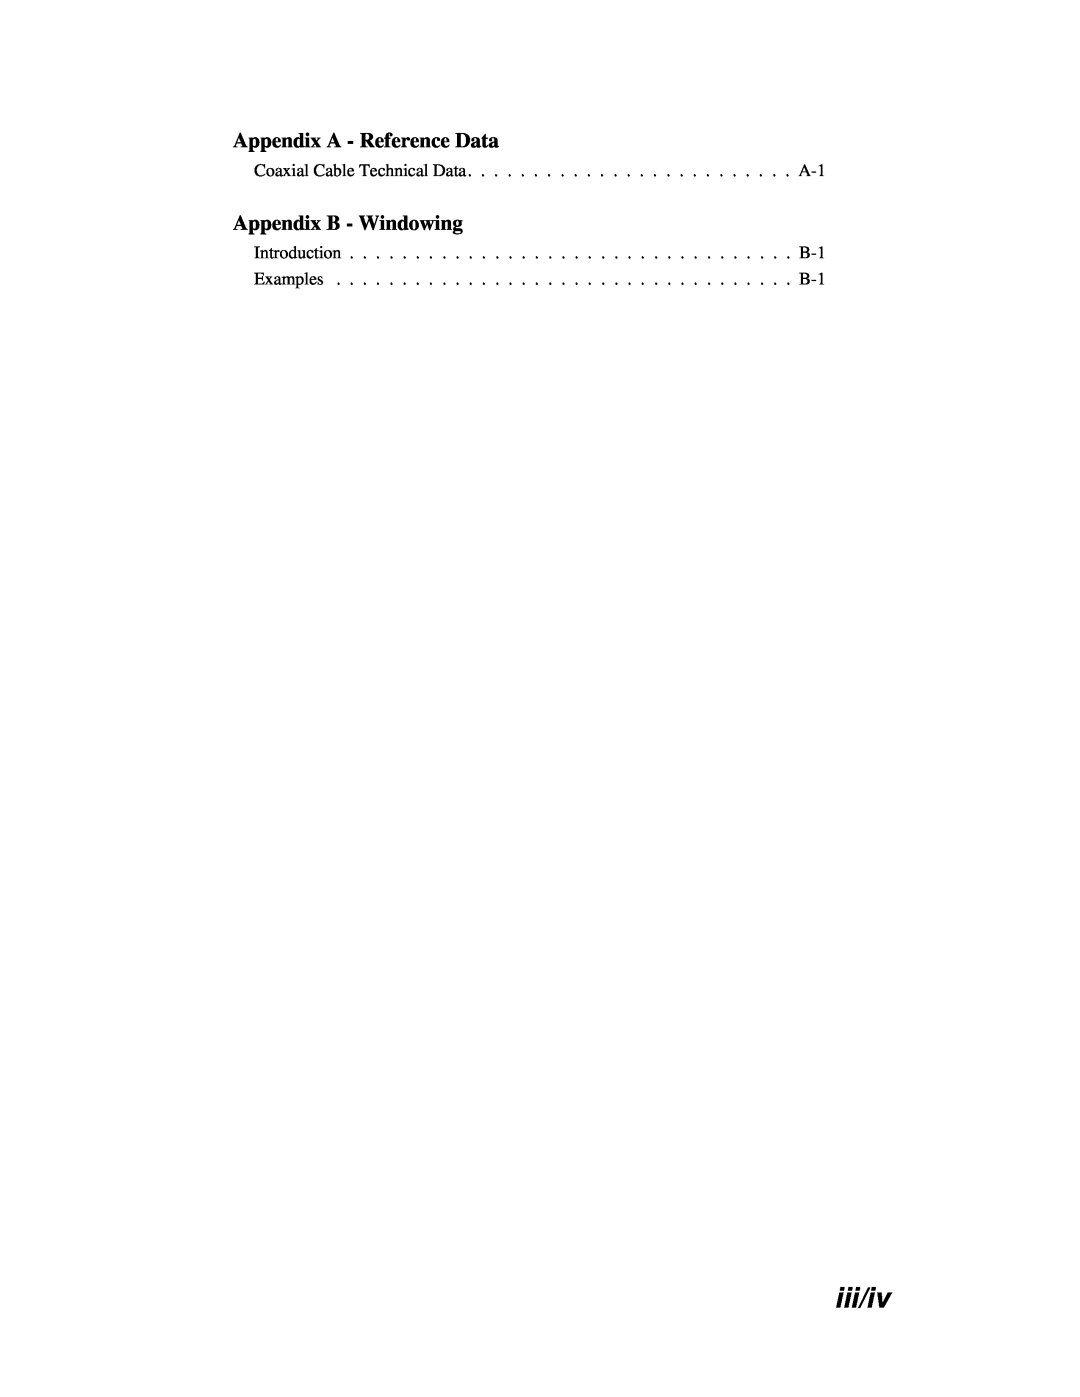 Anritsu S251C manual iii/iv, Appendix A - Reference Data, Appendix B - Windowing 